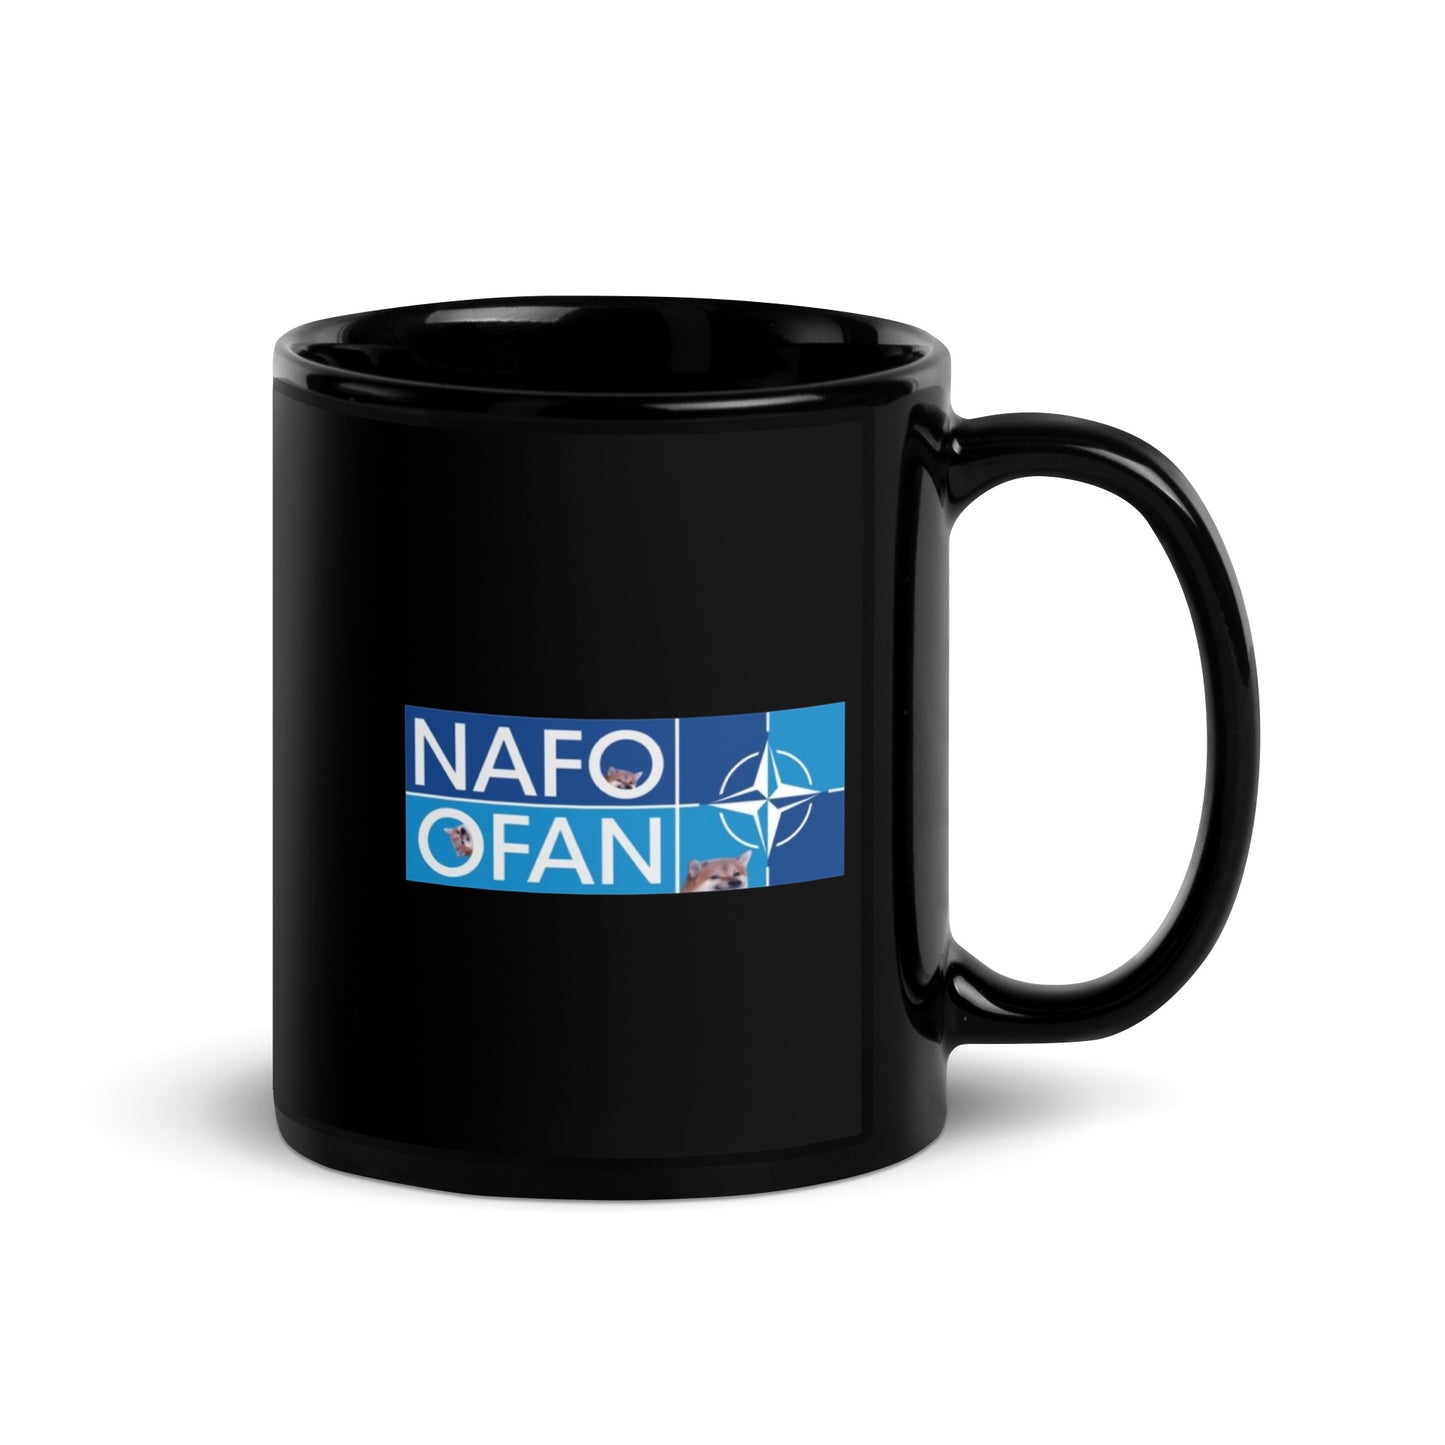 Personalized NAFO Fella Mug